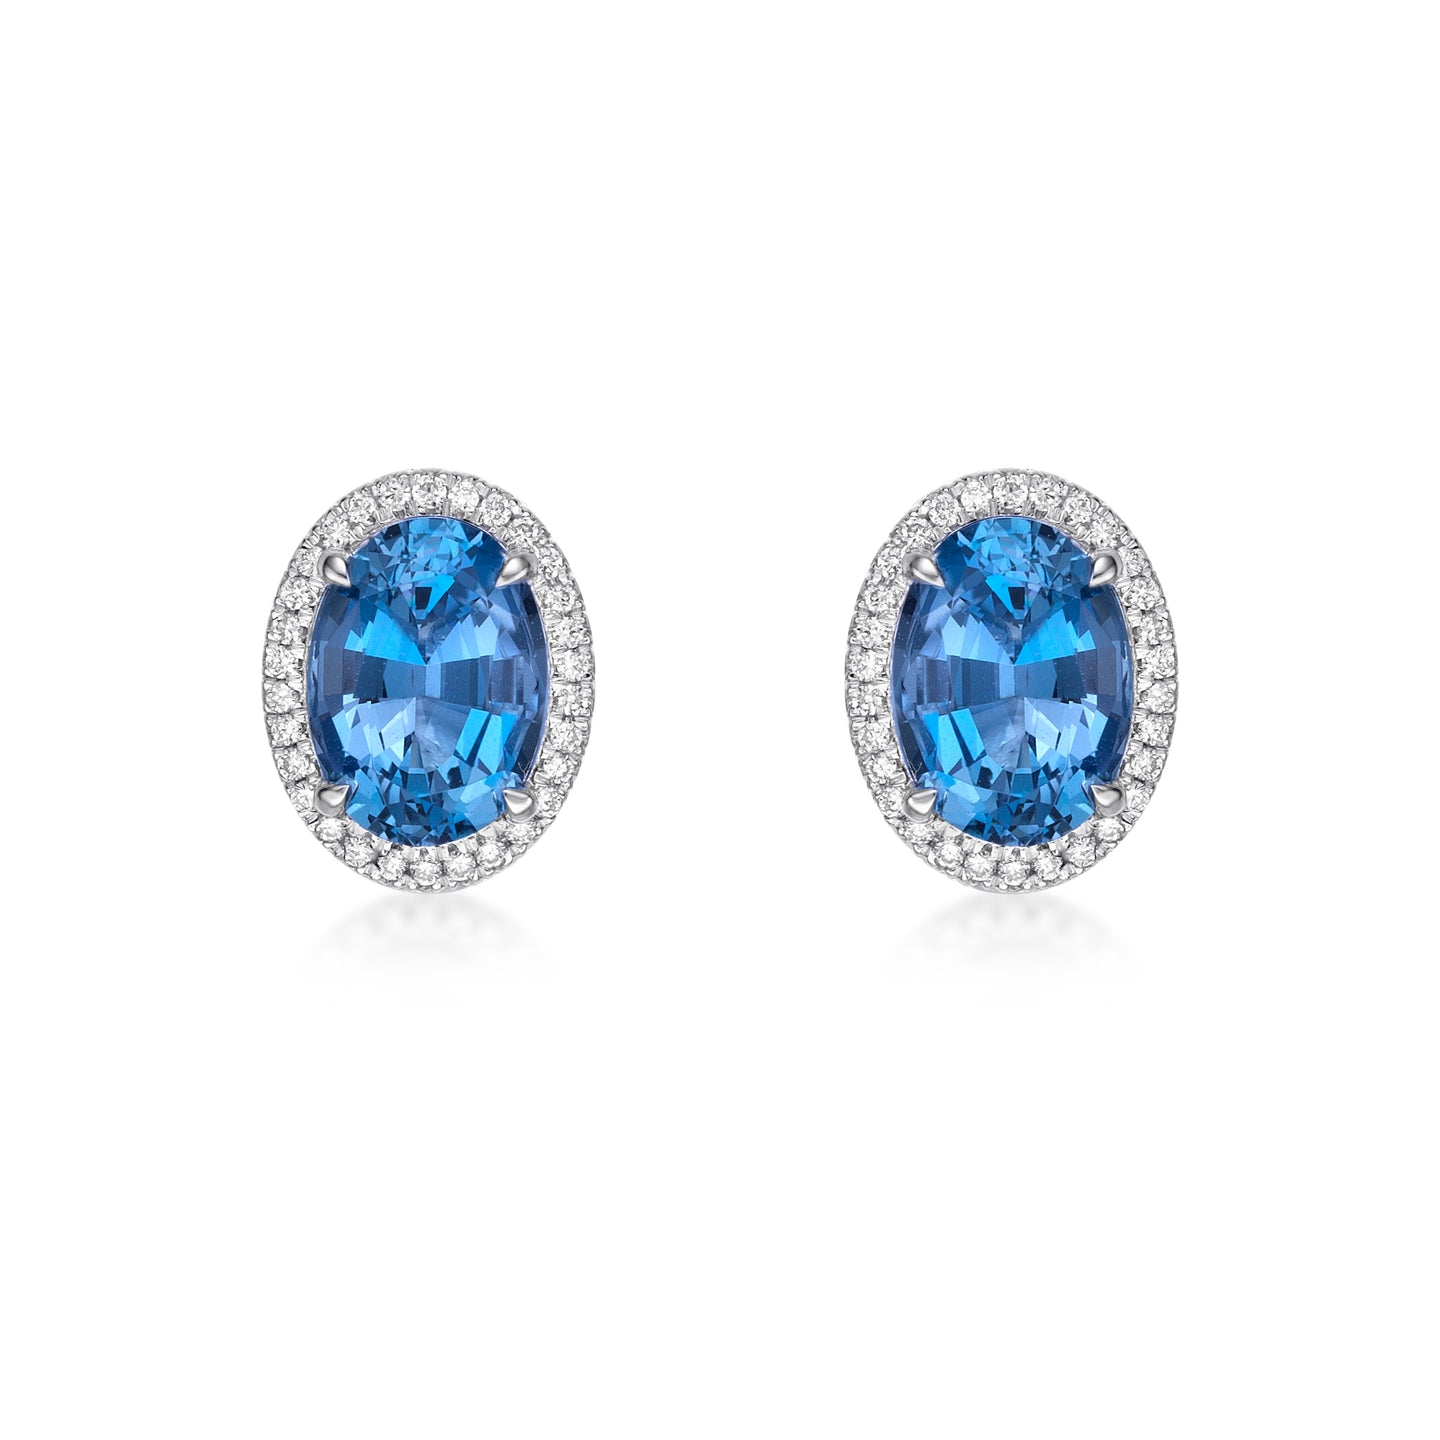 Oval Cut Aquamarine Diamond Halo Earrings